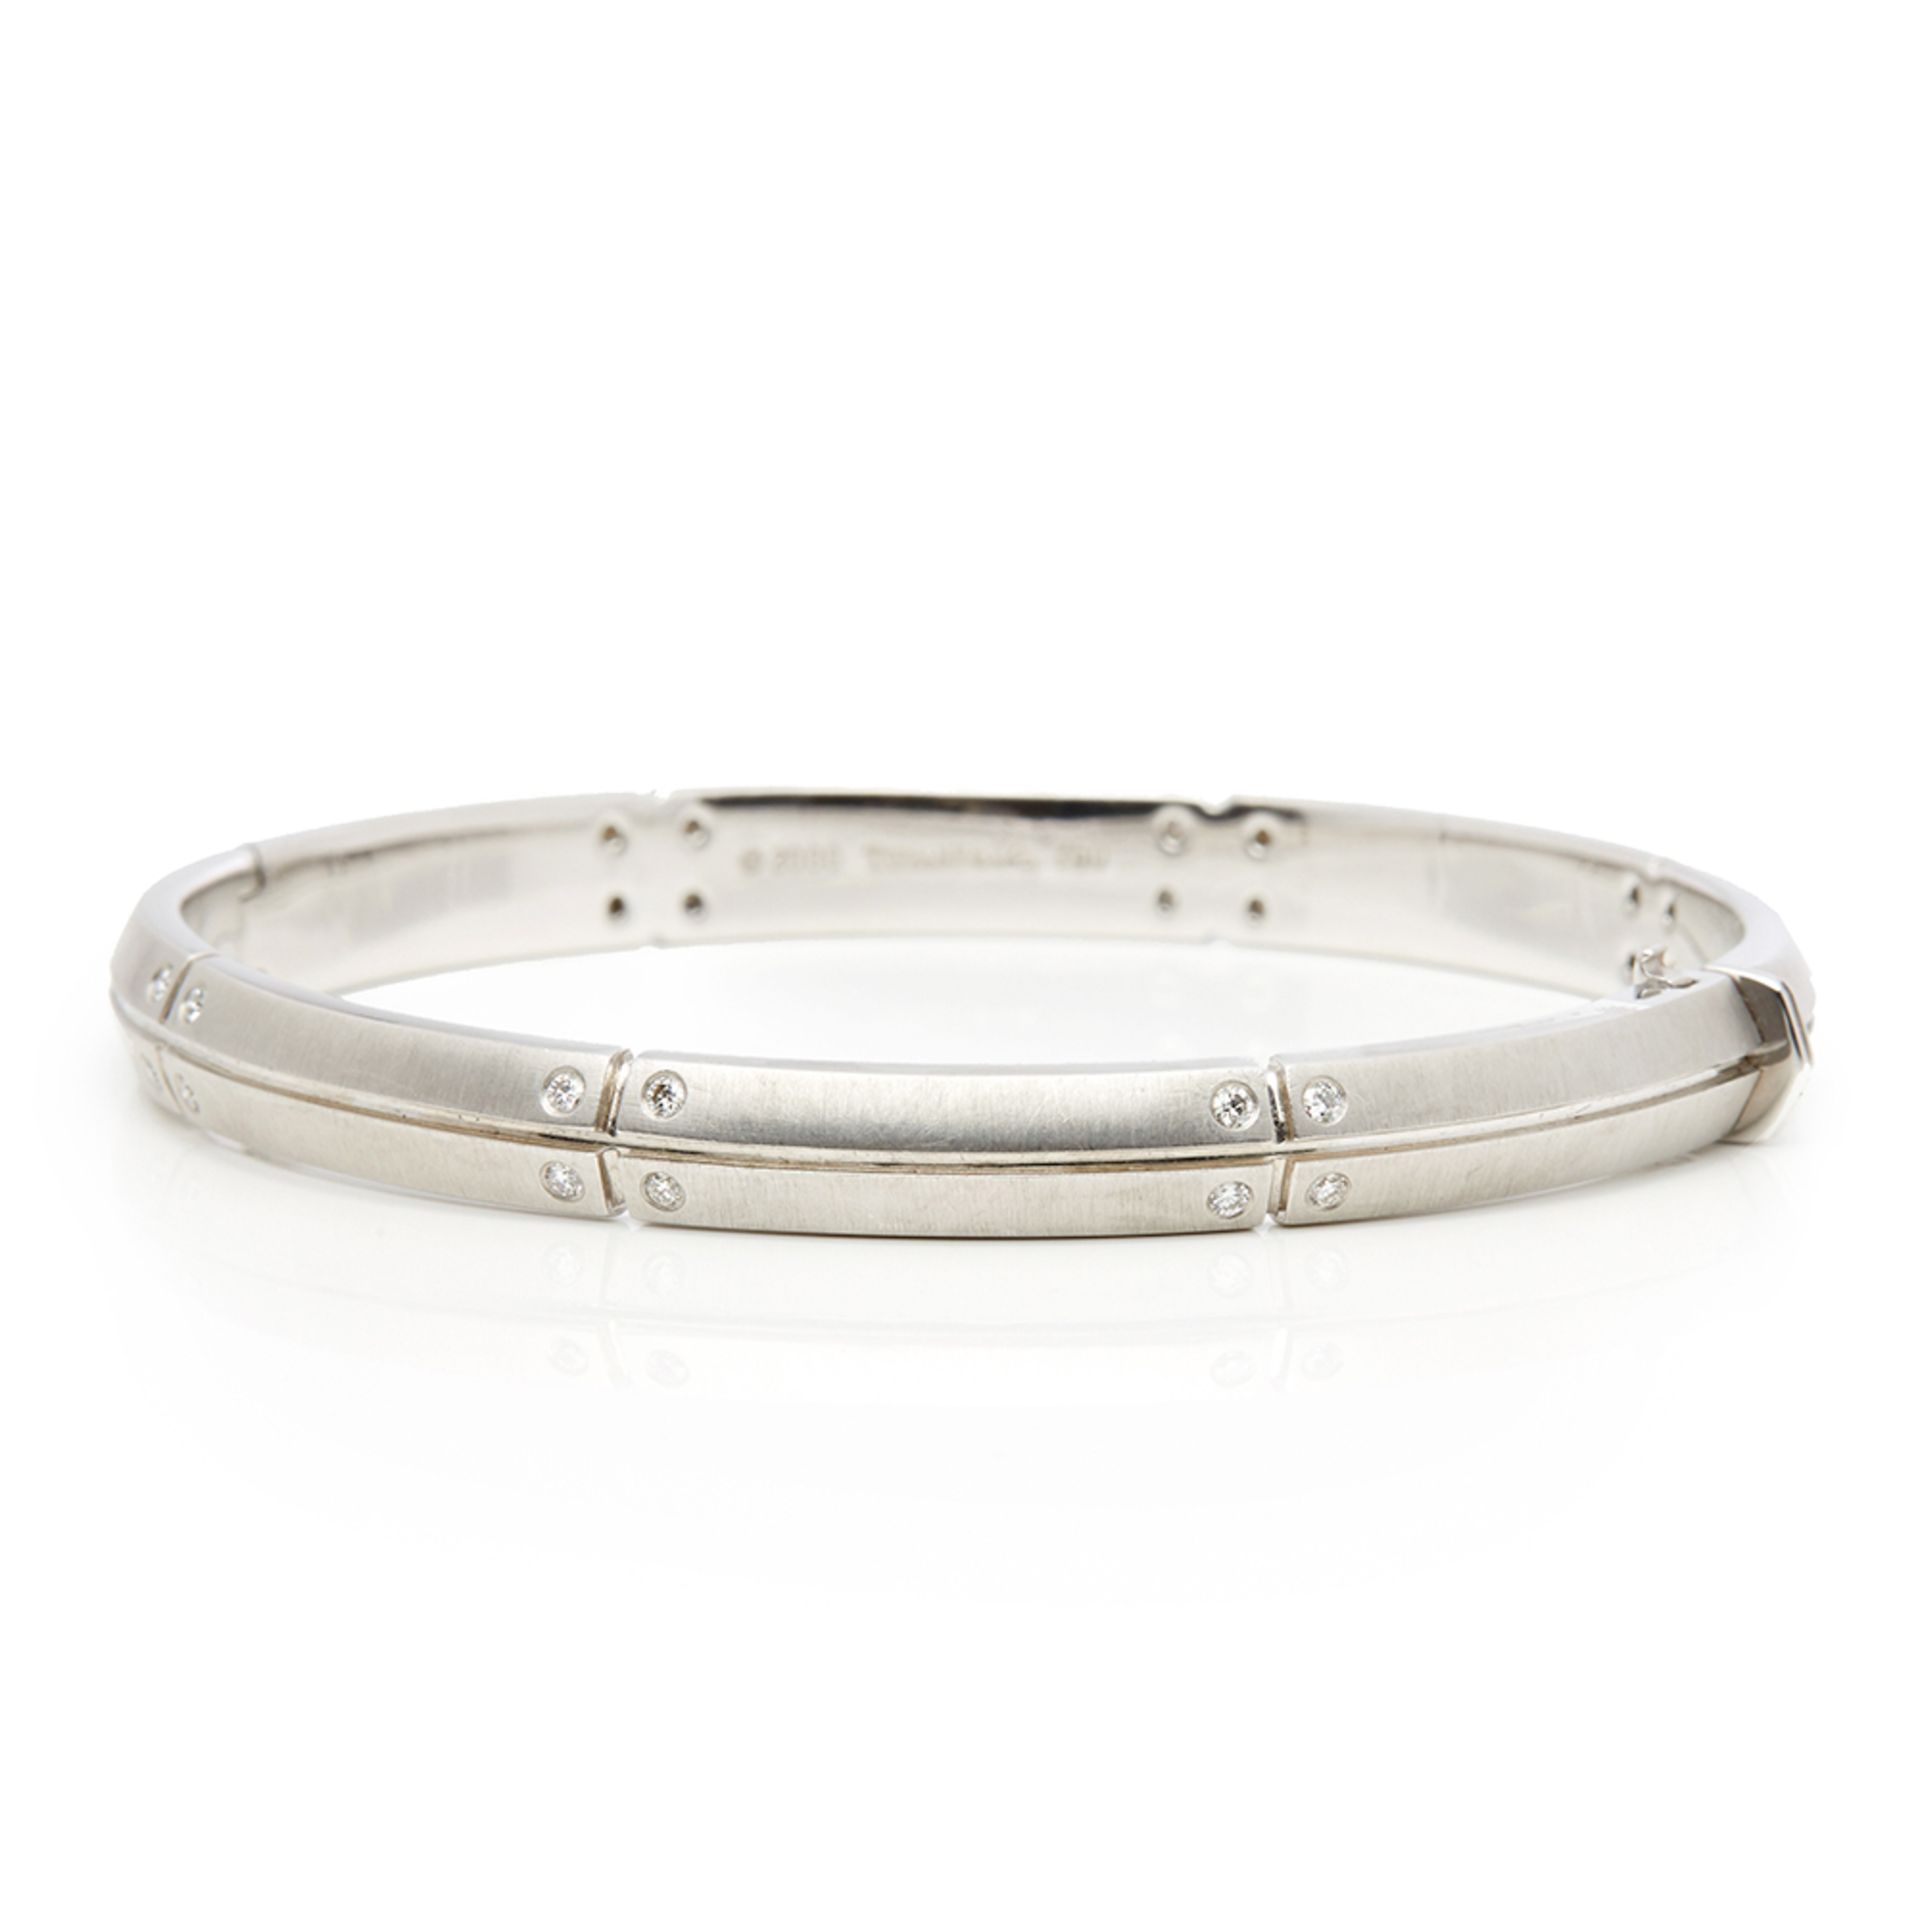 Tiffany & Co. 18k White Gold Diamond Streamerica Bracelet - Image 2 of 8